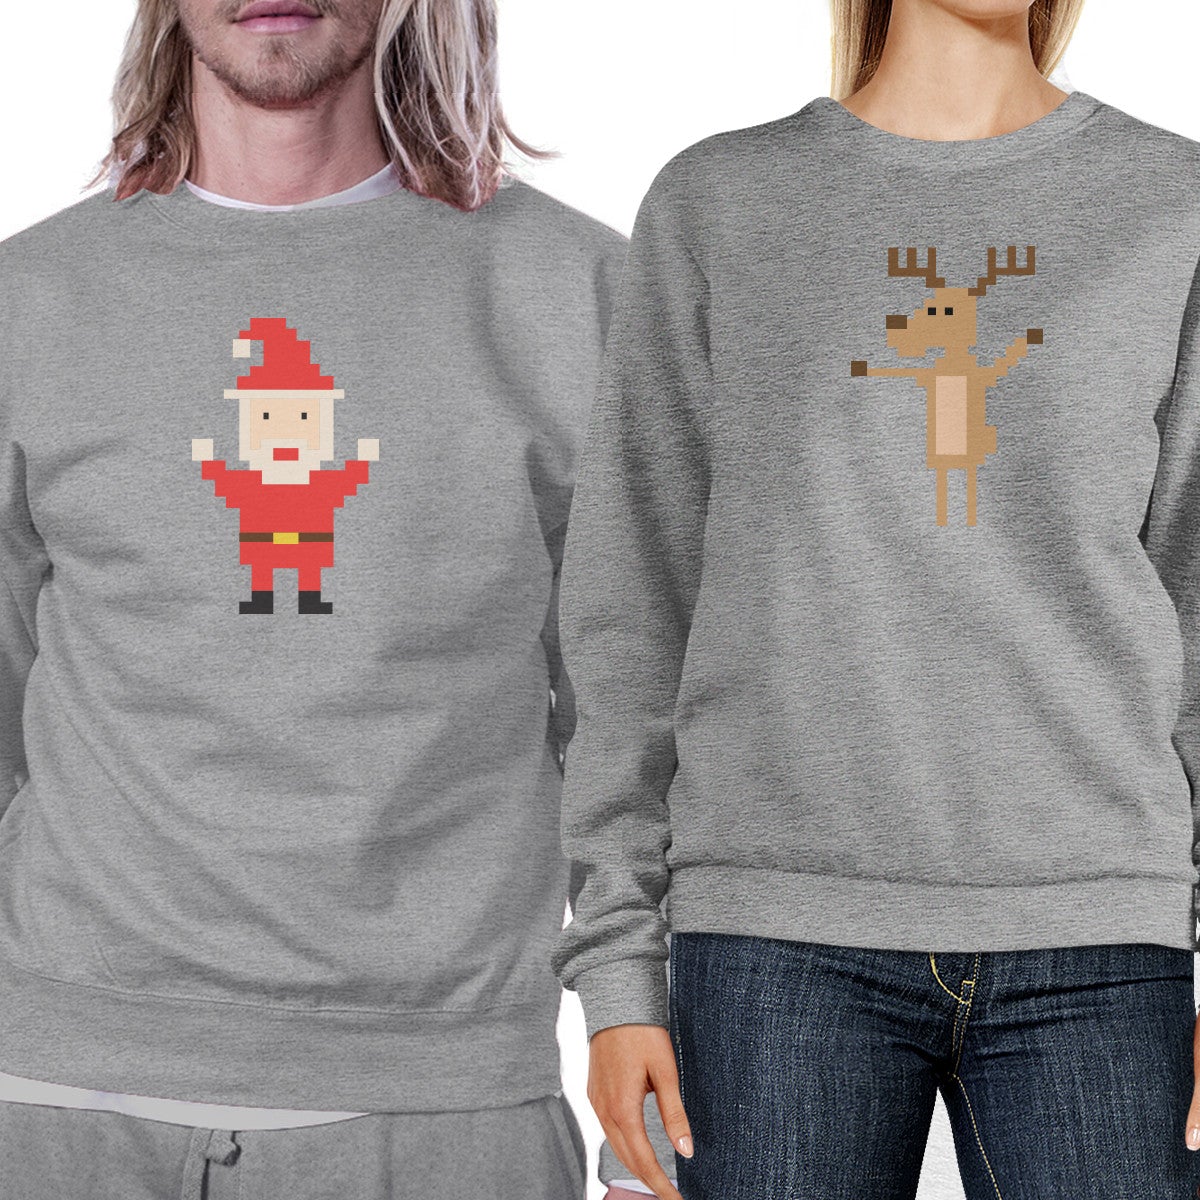 Pixel Santa And Rudolph Couple Sweatshirts Holiday Matching Tops Gray